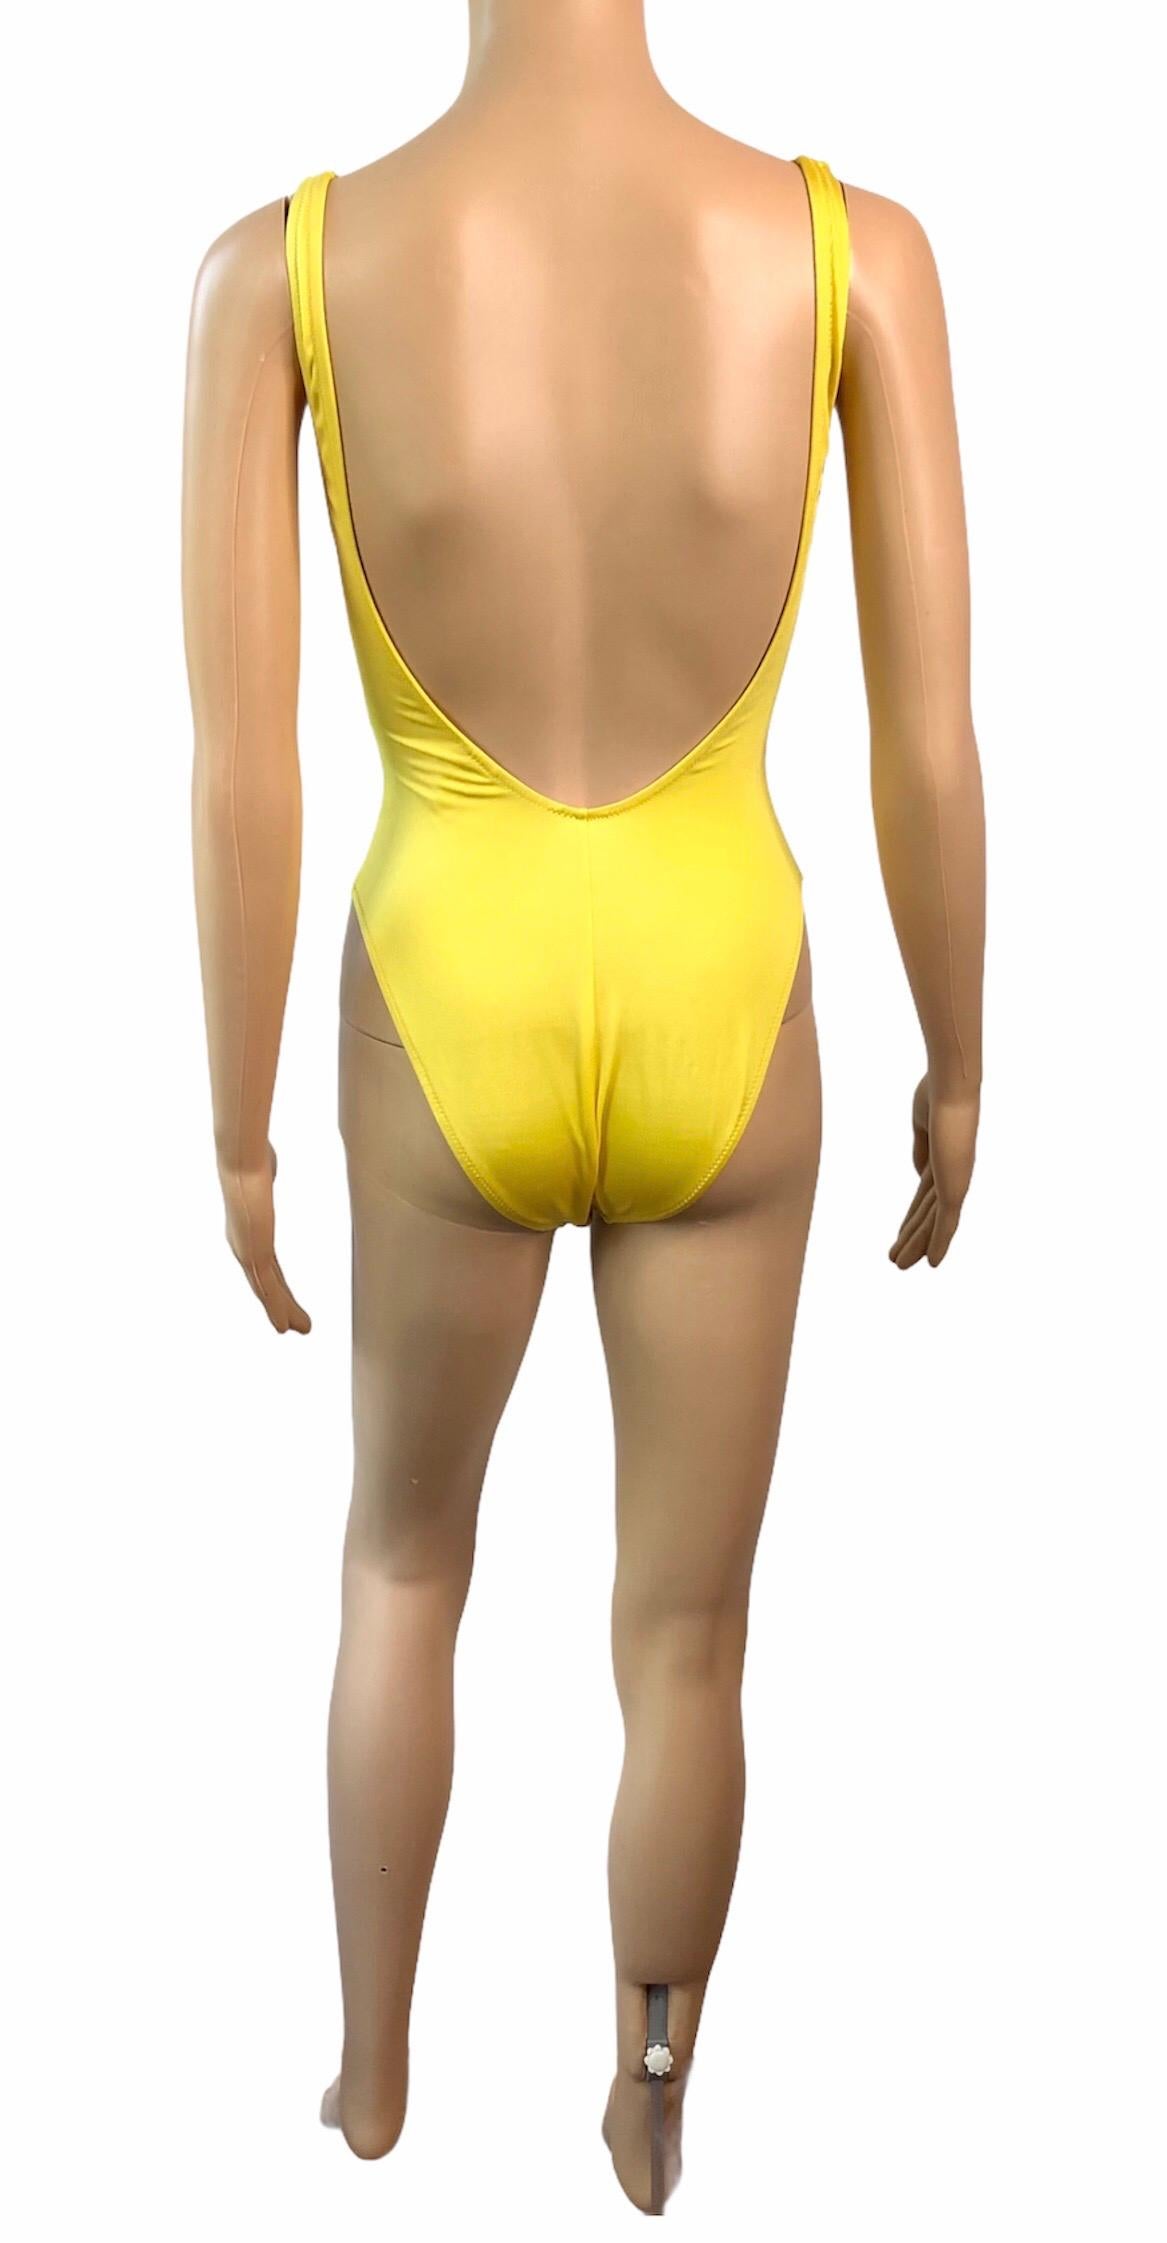 Gianni Versace S/S 1996 Vintage Crystal Zipper Yellow Bodysuit Swimwear Swimsuit For Sale 2